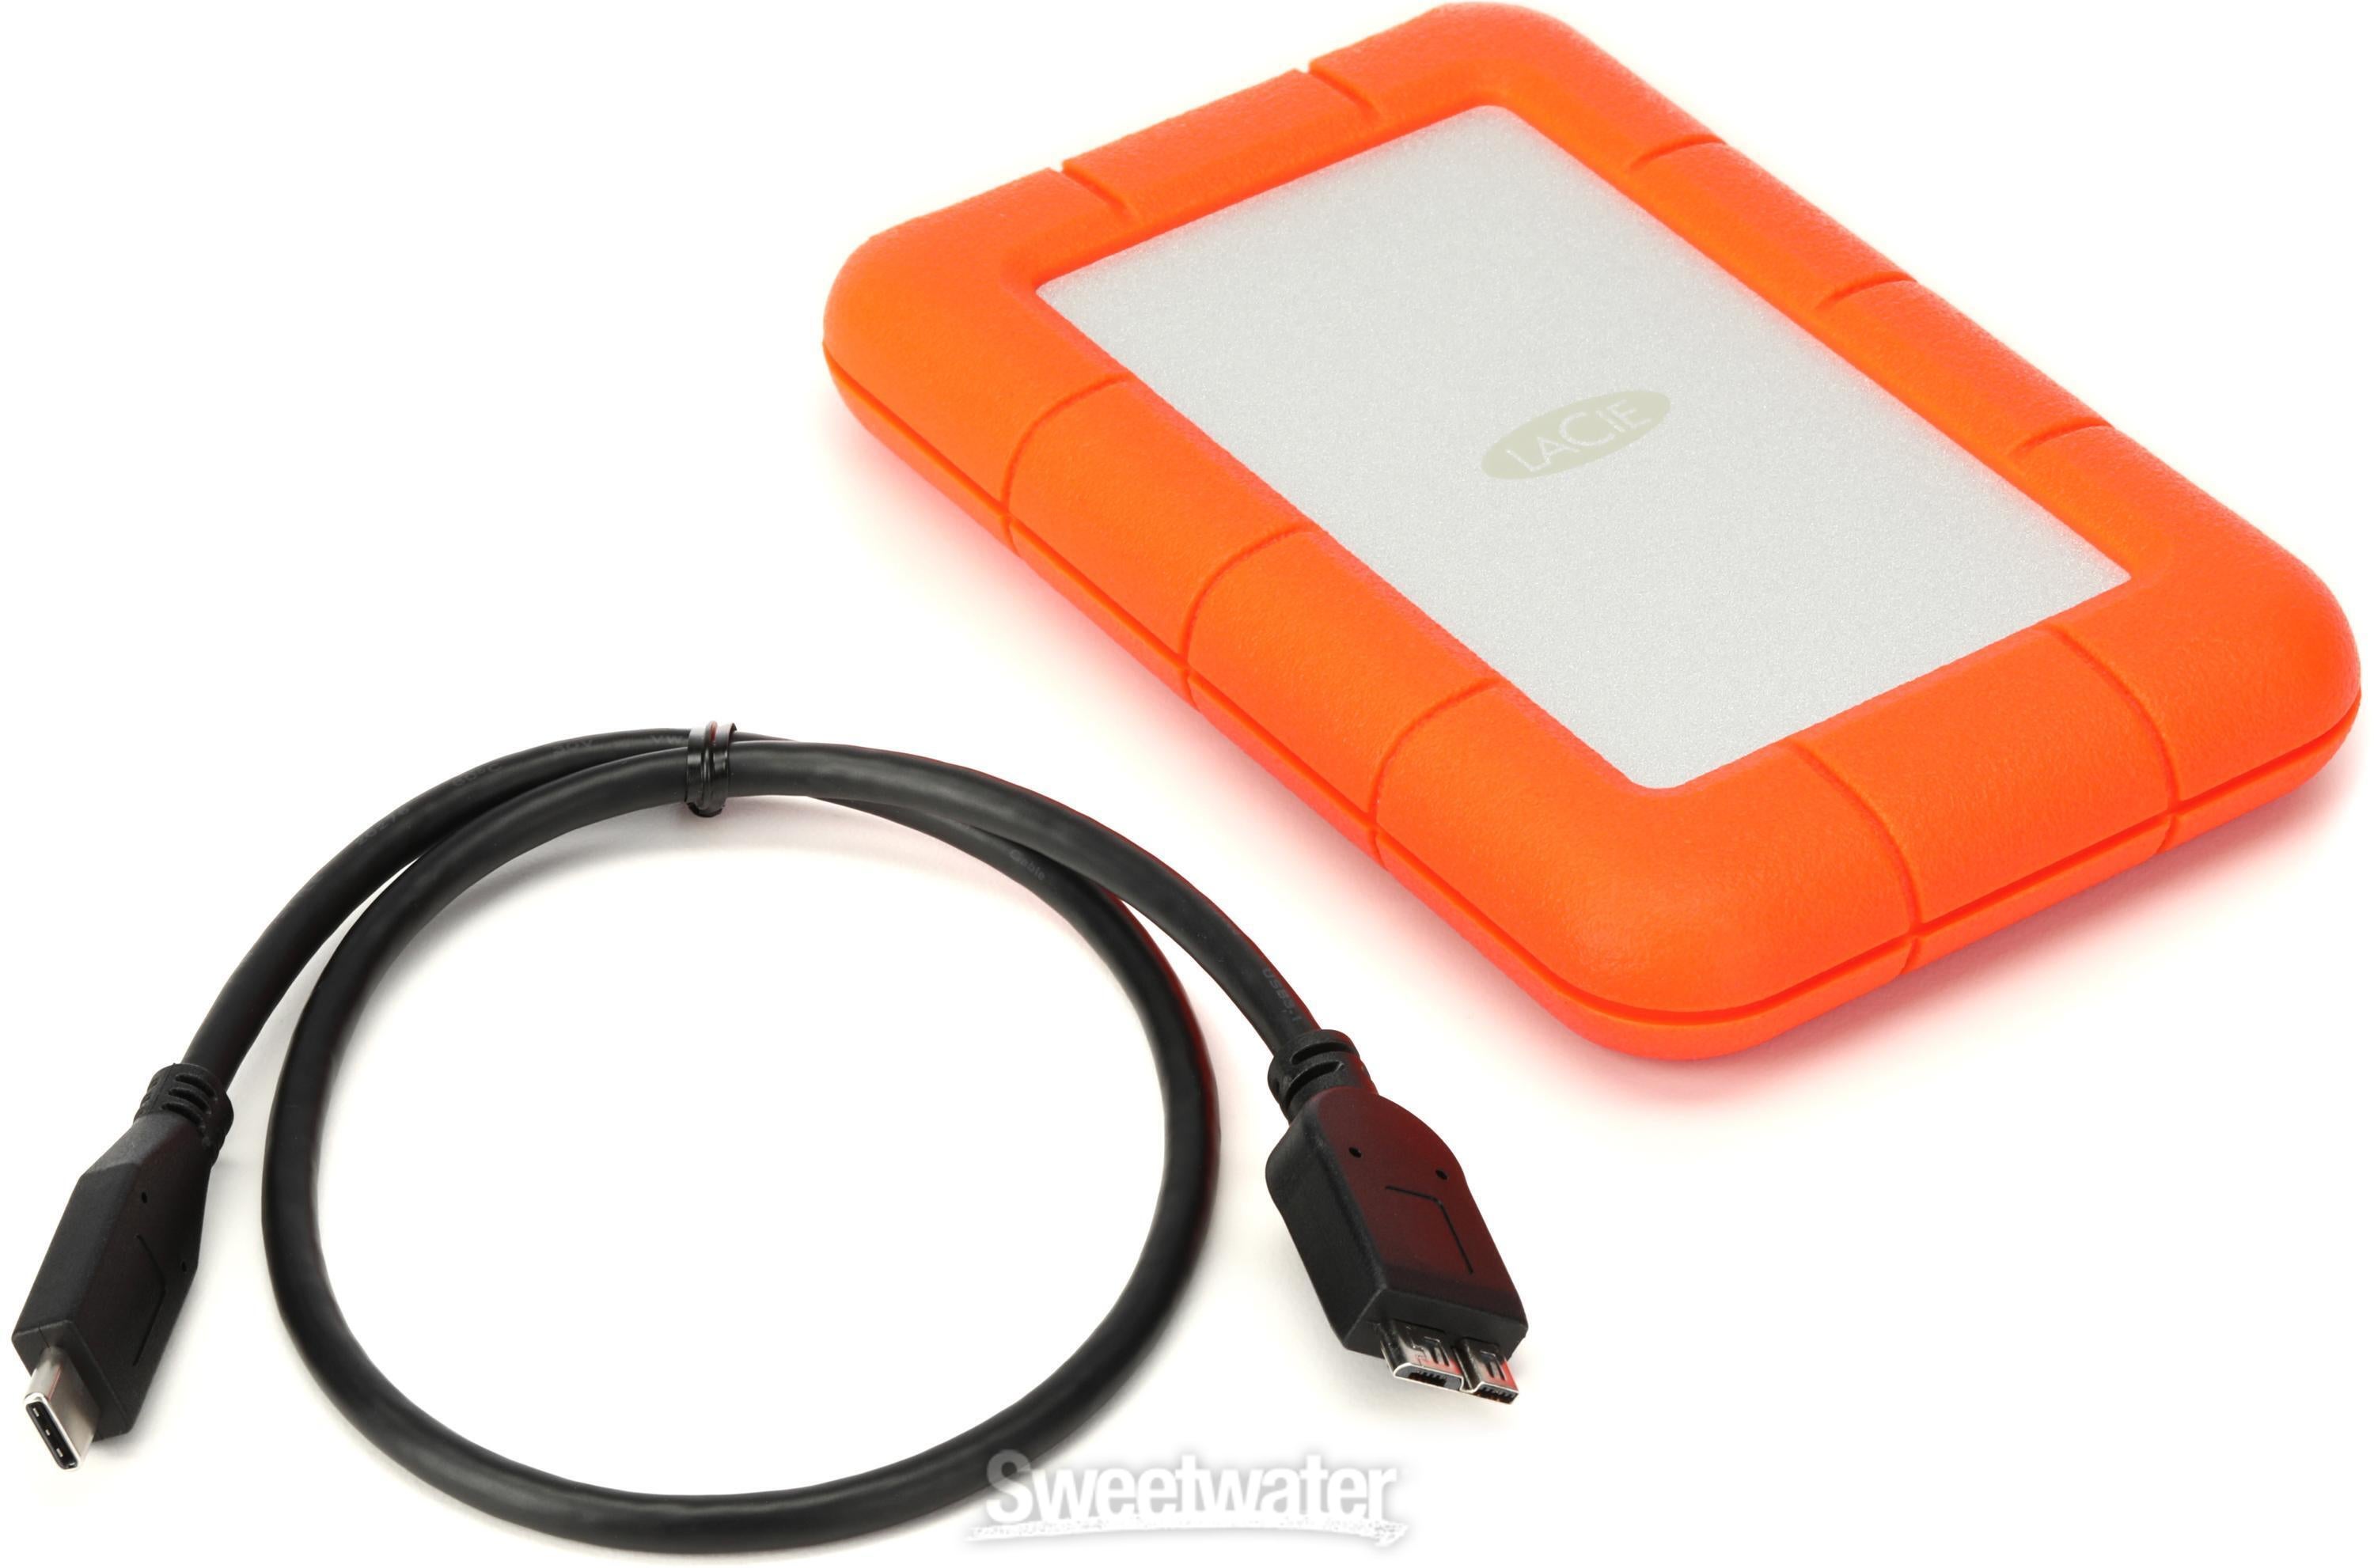 LaCie Rugged Mini 4TB USB 3.0 Portable Hard Drive | Sweetwater